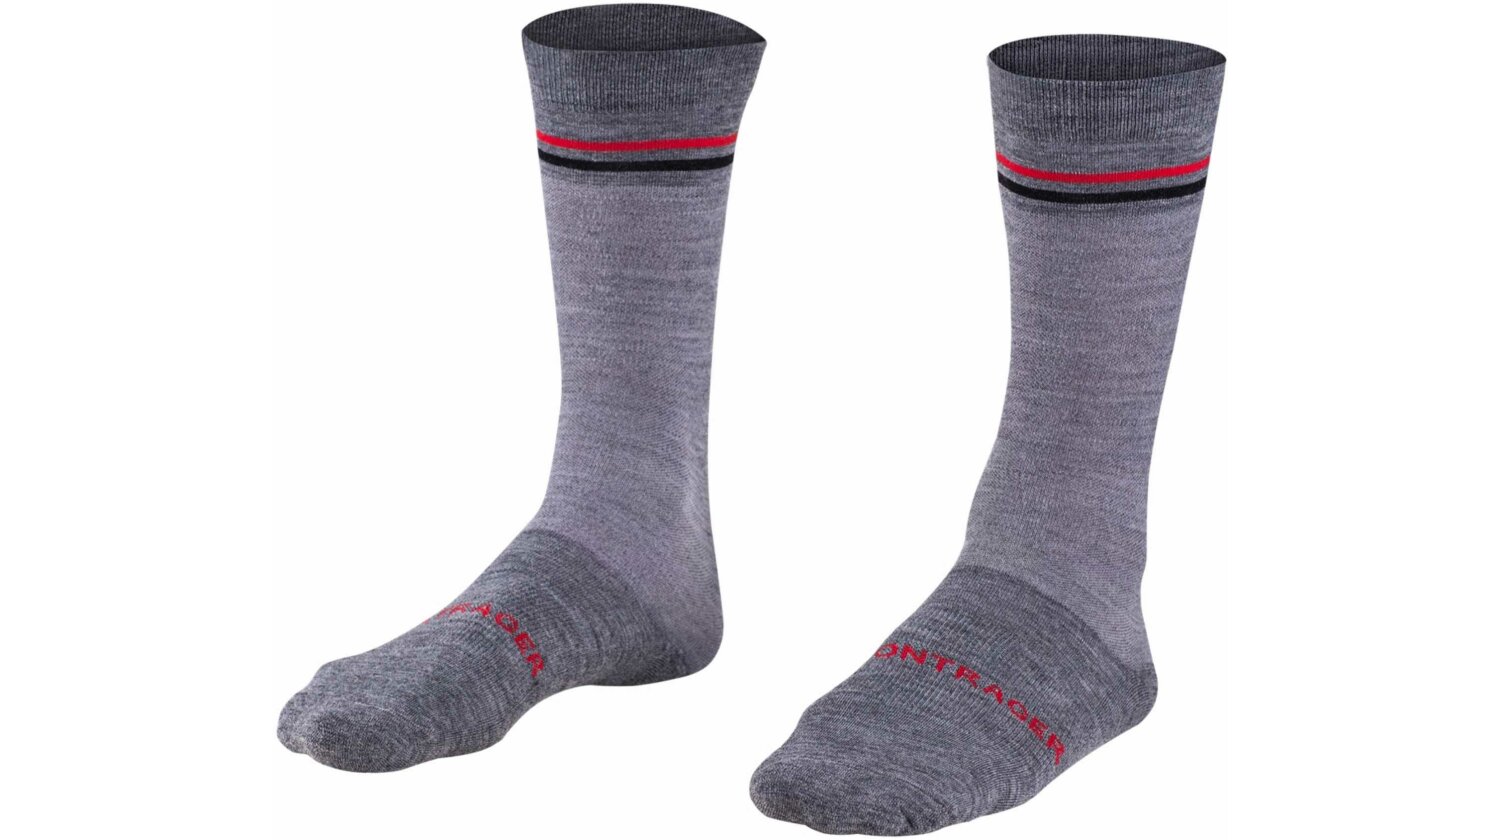 Bontrager Race Crew Thermal Wool Socke dark grey/red